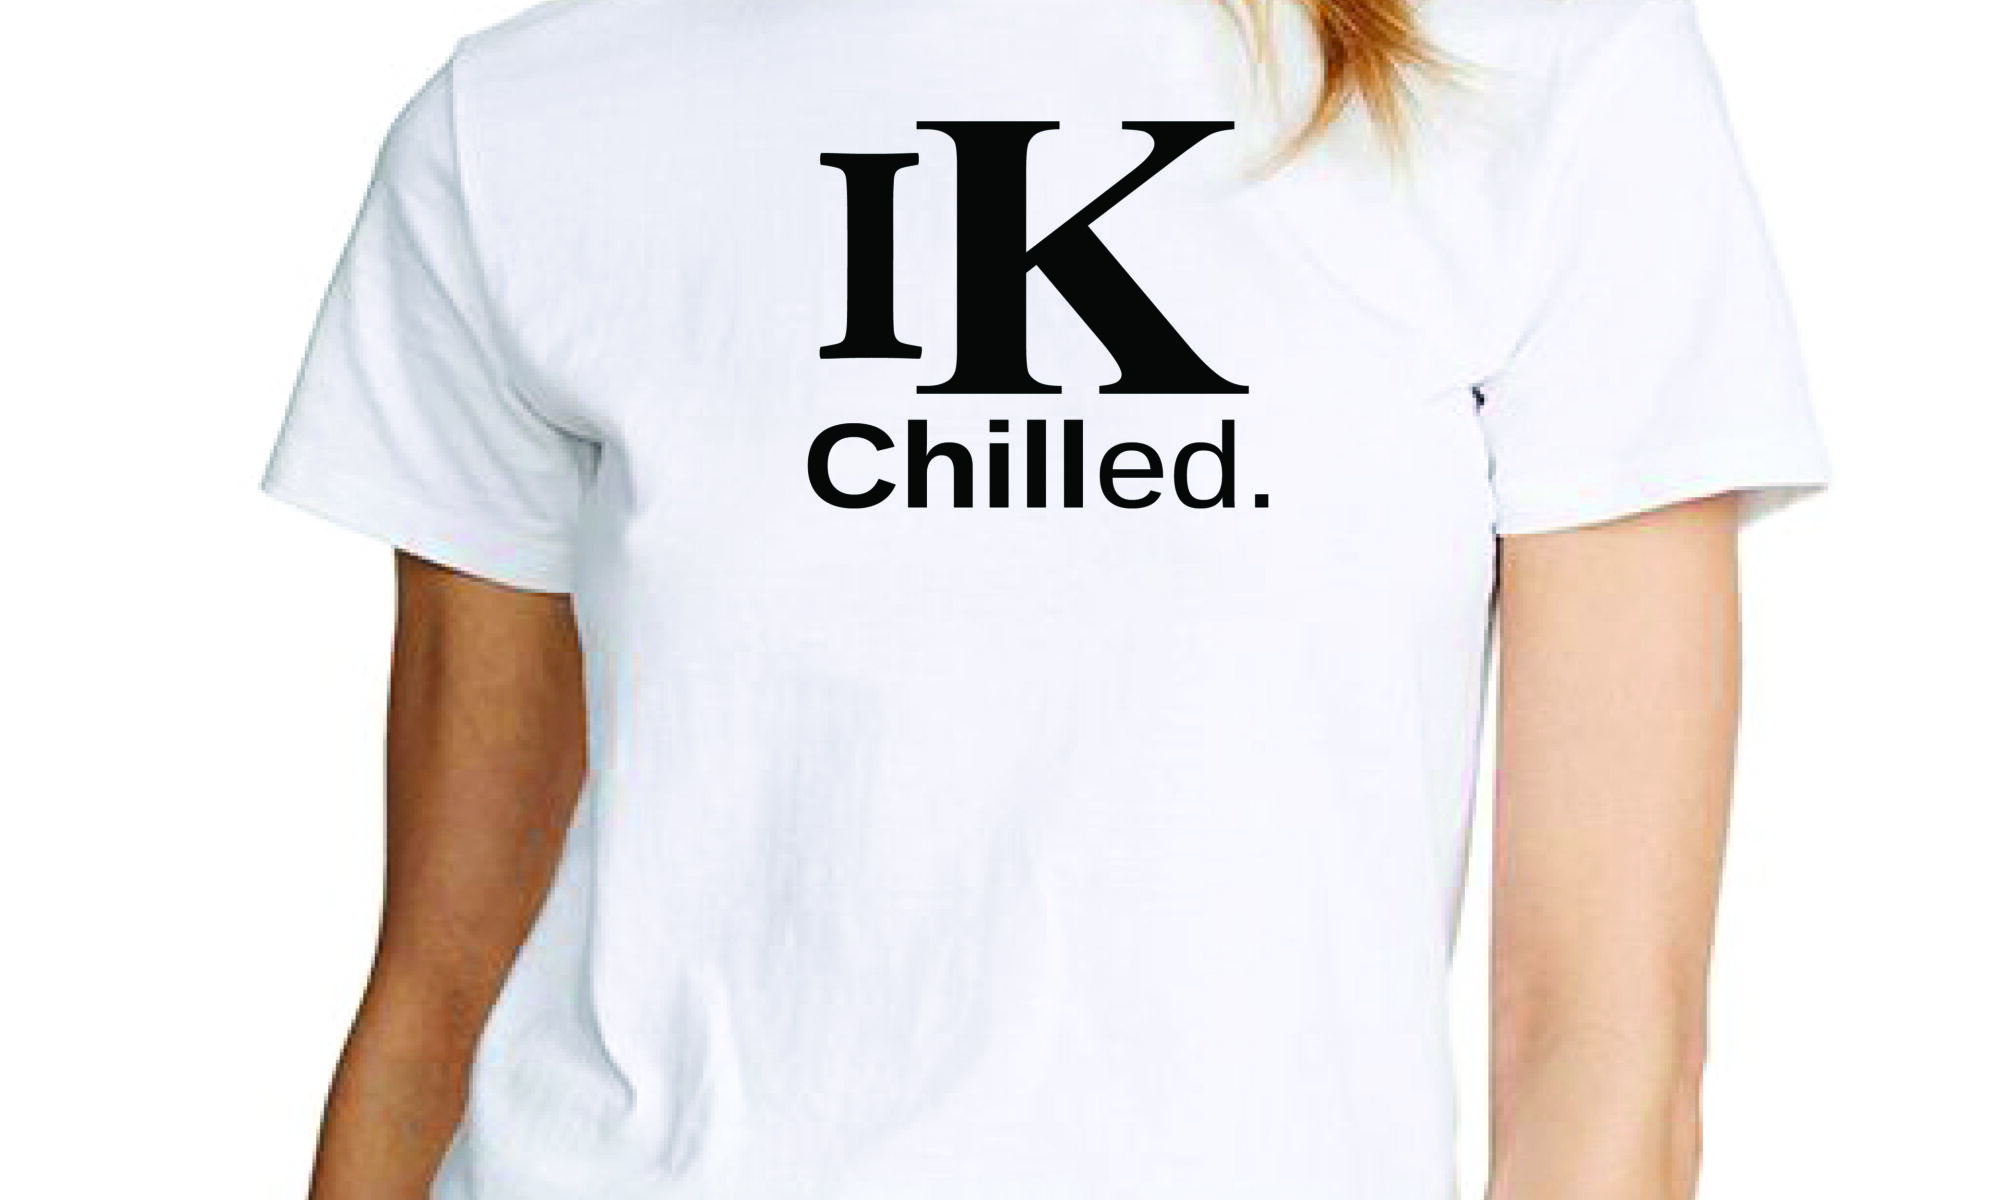 IK Original Chilled Woman White T Shirt